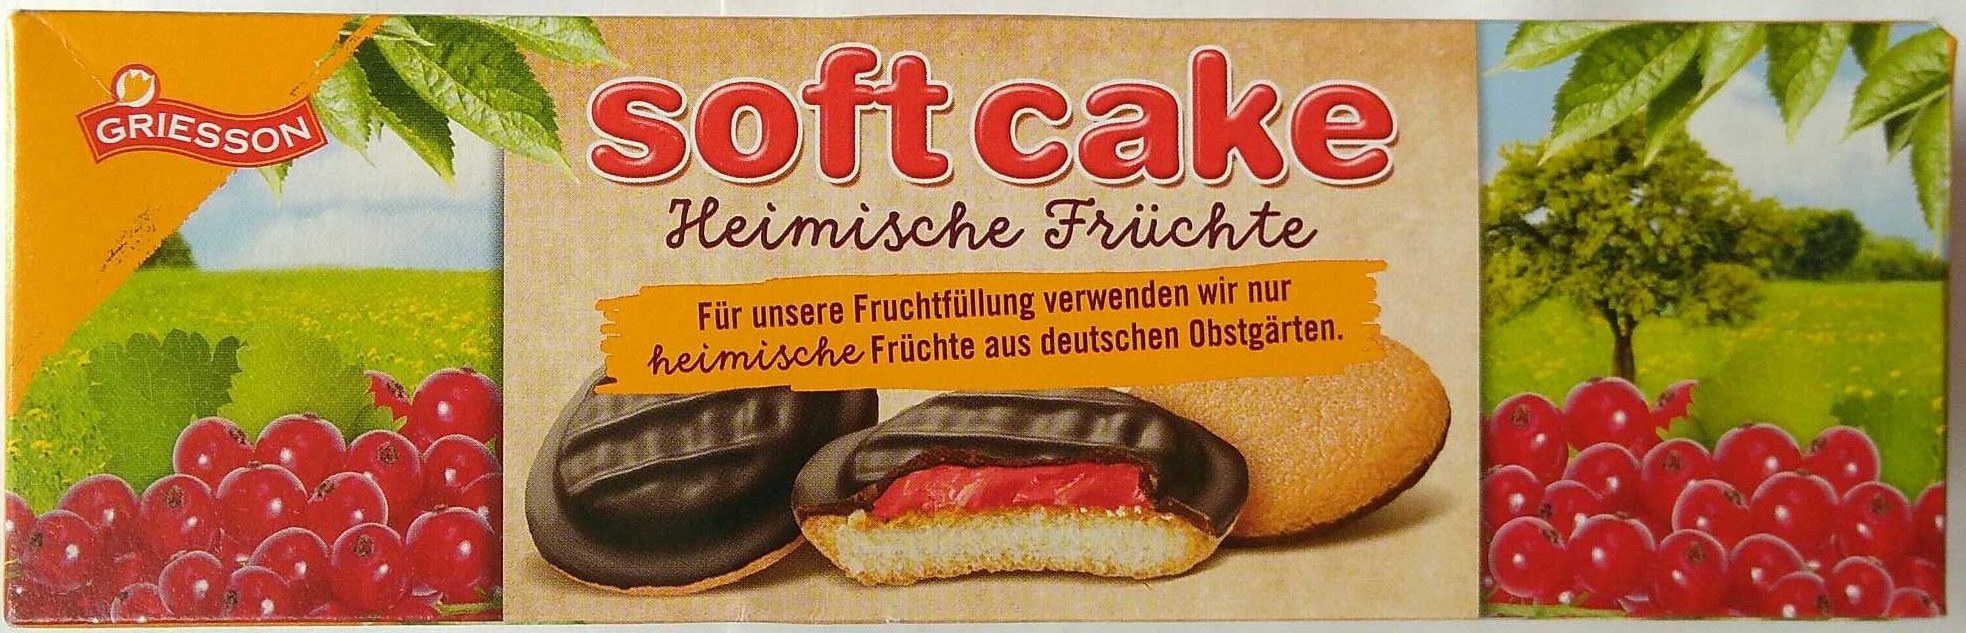 soft cake Heimische Früchte Johannisbeere - Product - de